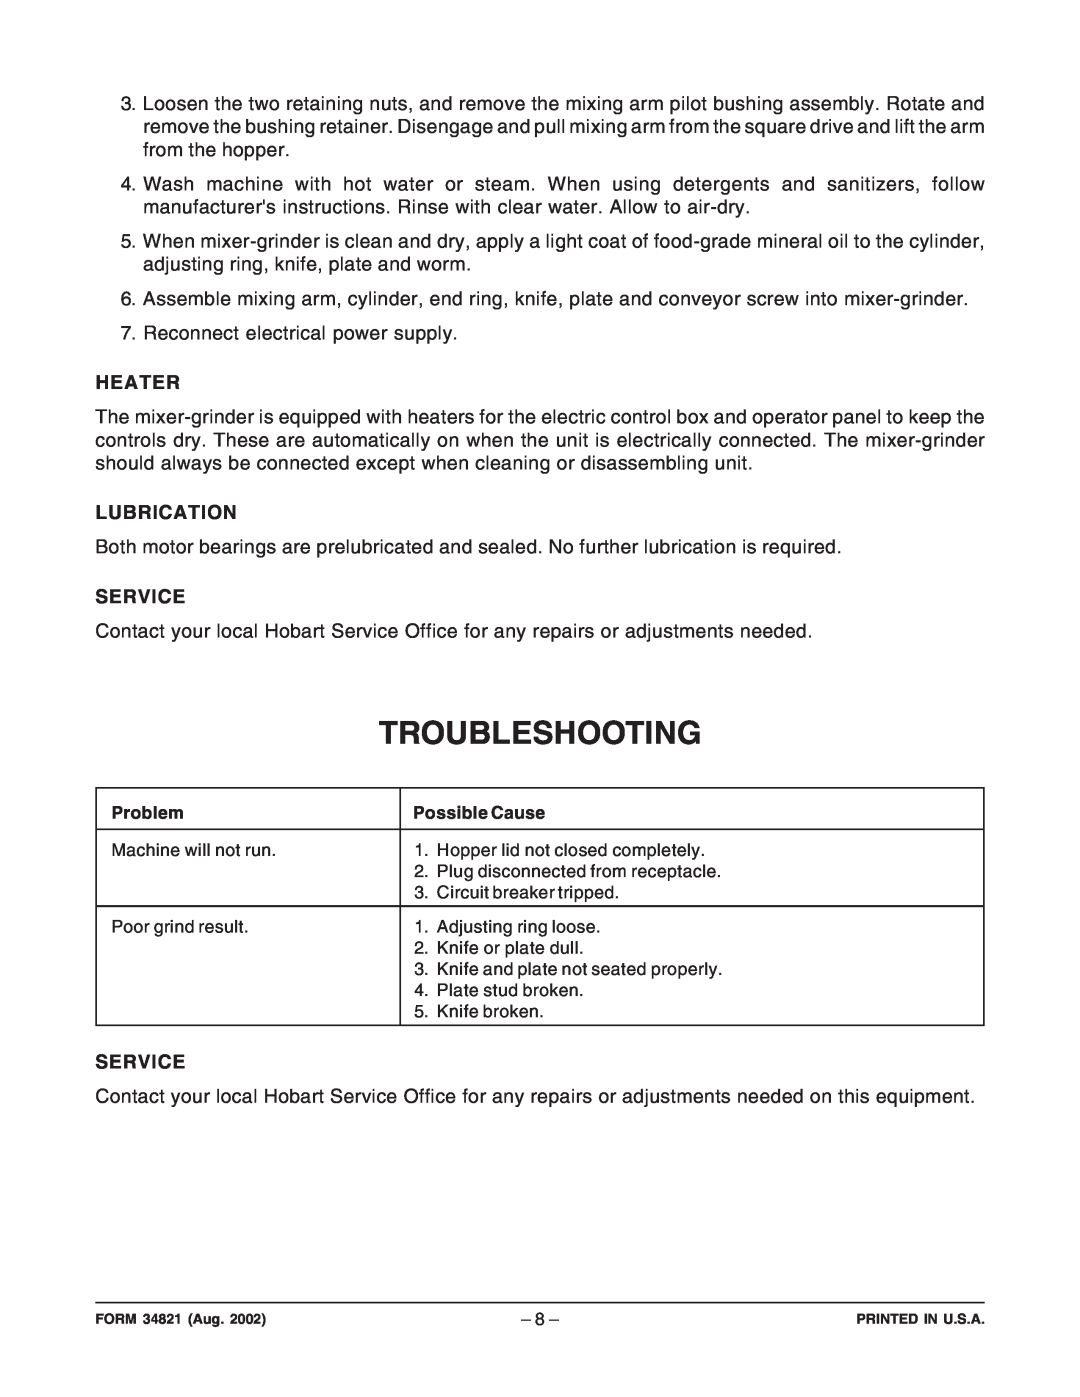 Hobart 4246 manual Troubleshooting, Heater, Service, Lubrication 